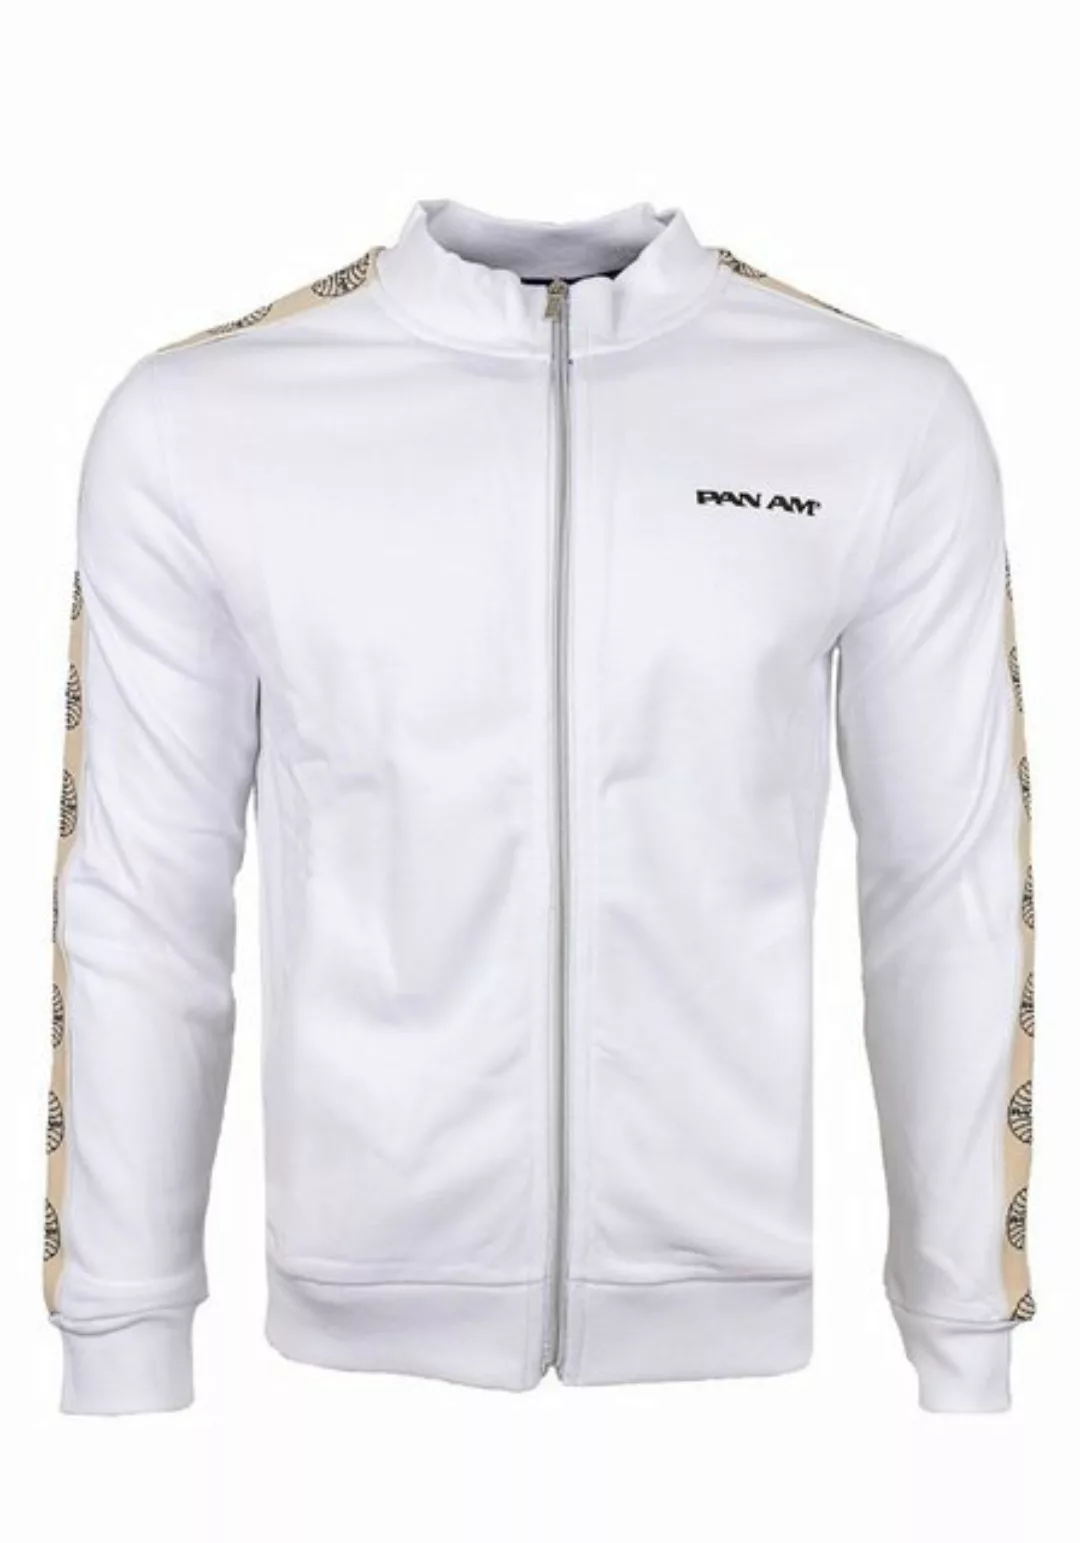 PAN AM Sweatshirt Pan Am Herren Sweatshirt PFZH08 Jacket günstig online kaufen